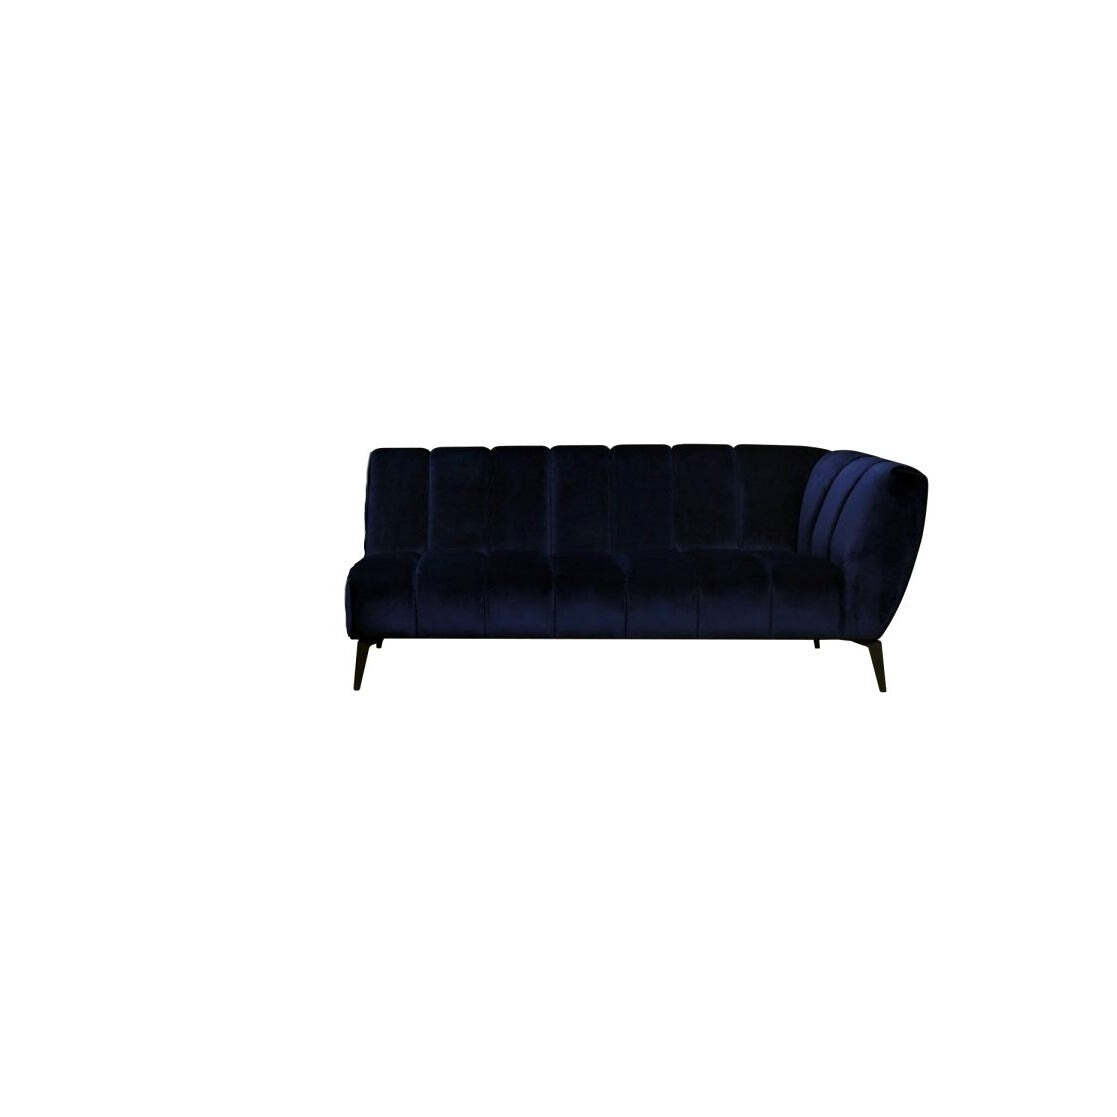 Jack 3 Seater Velvet Sofa RHF - Royal Blue F20 TX1229